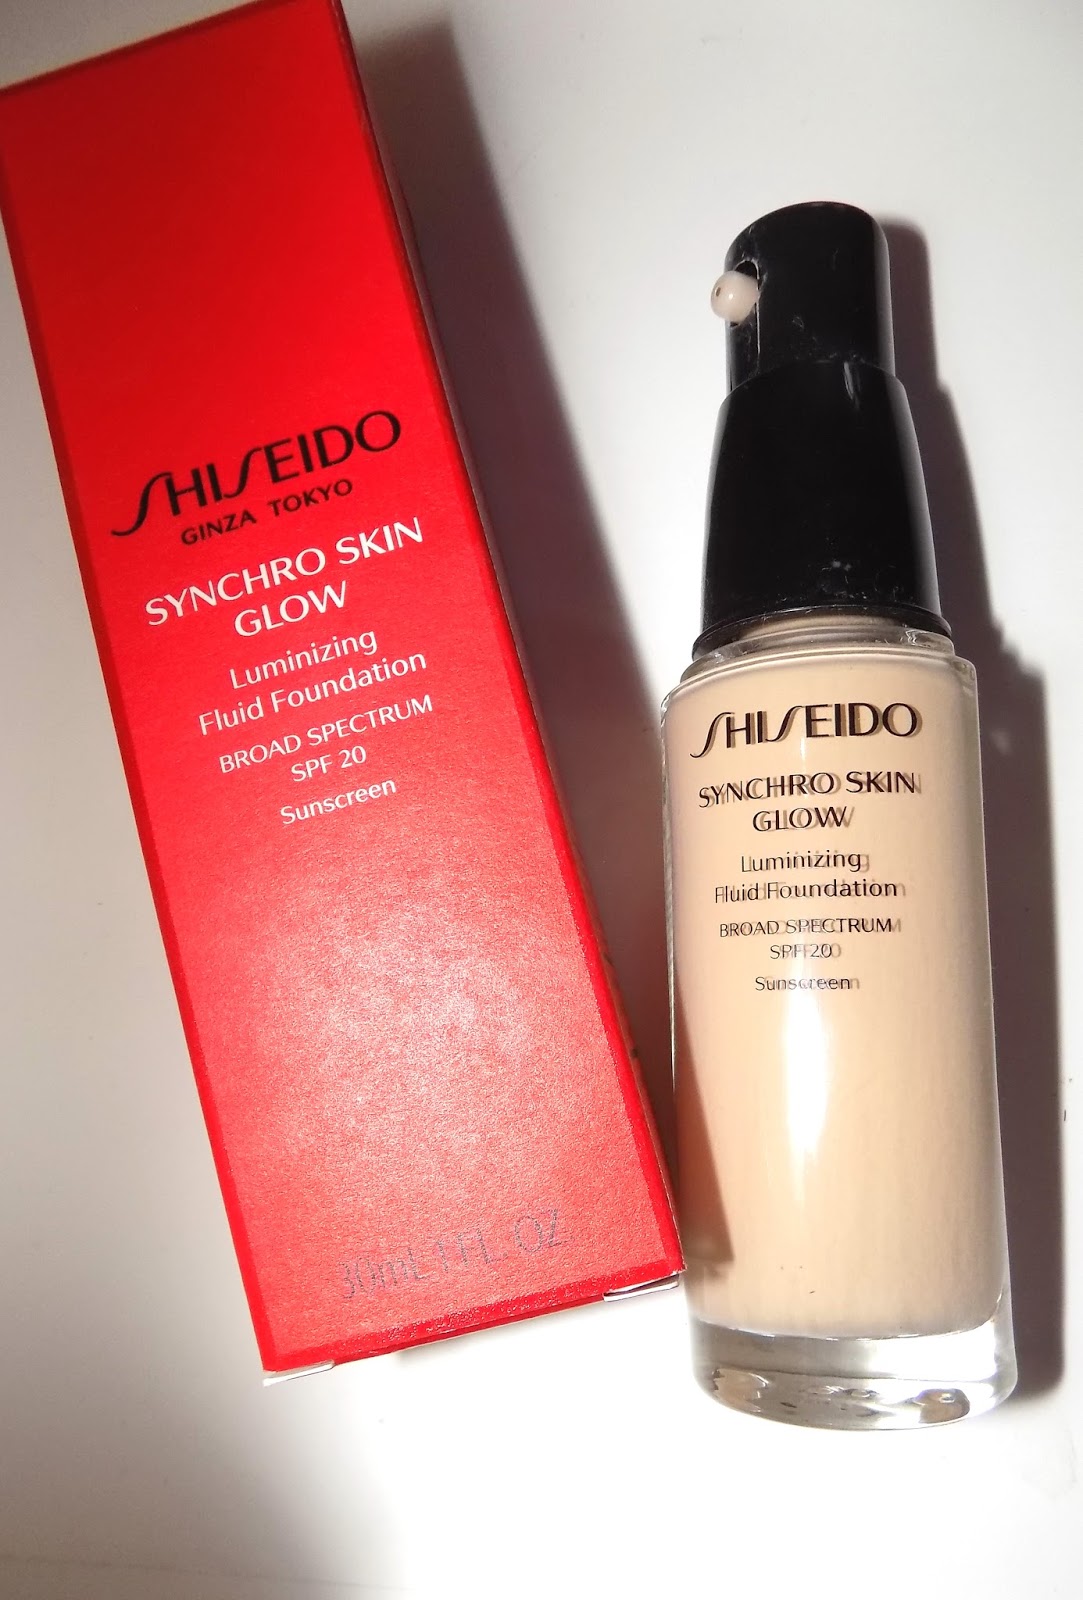 synchro+skin+glow+shiseido.jpg